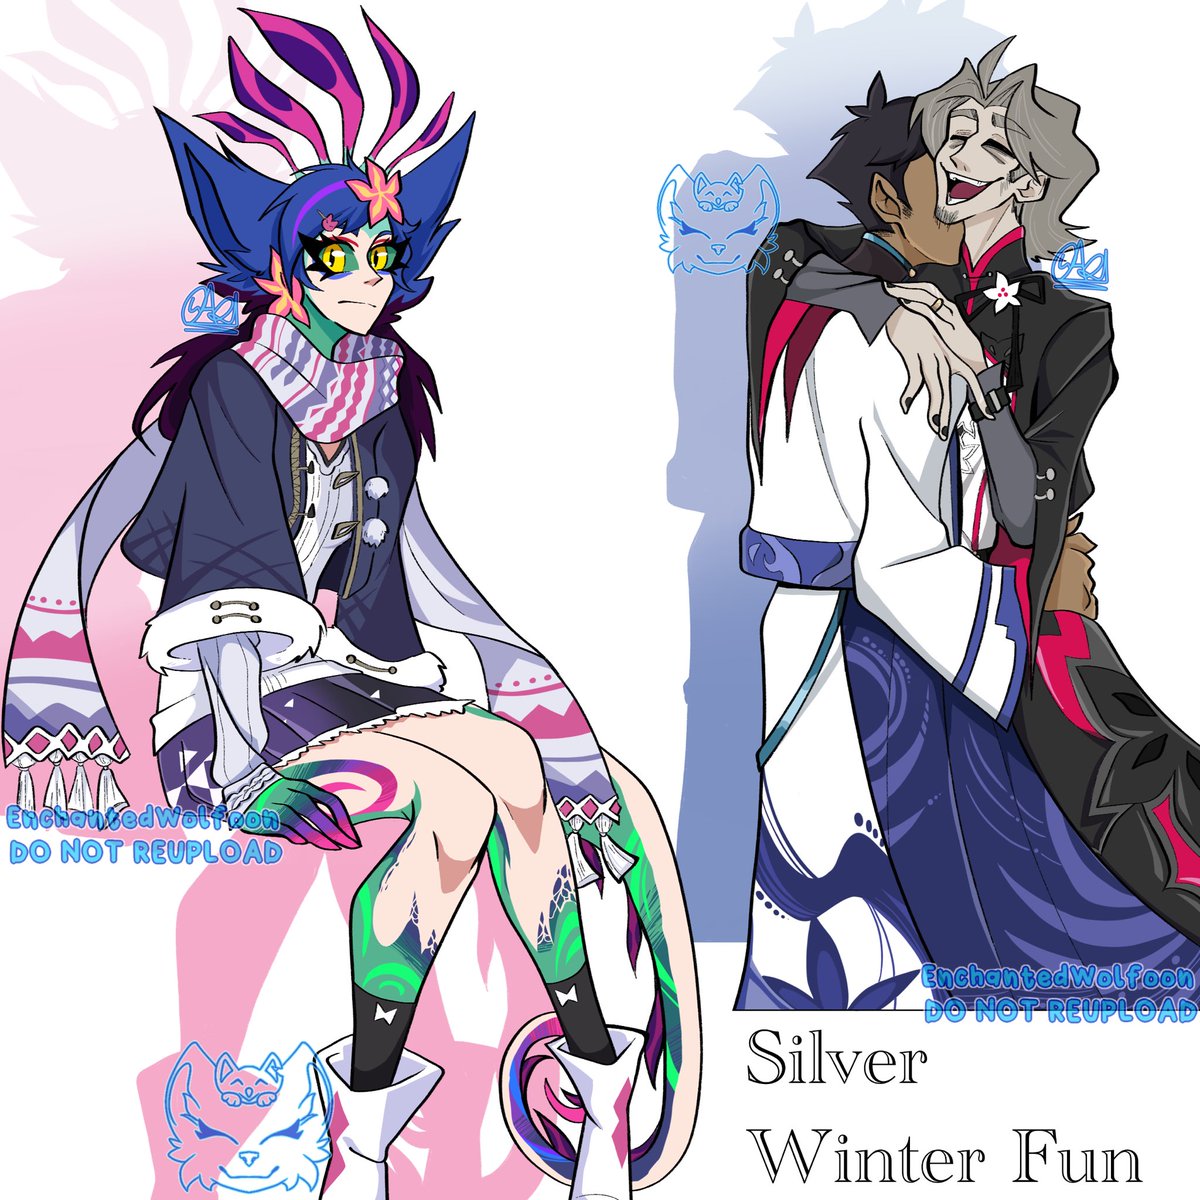 Silver Winter Fun ft. Neeko, Shaco & Jhin

Unmasked Jhin & Shaco designs by Okamisai
#neeko #shaco #jhin #ArtofLegends